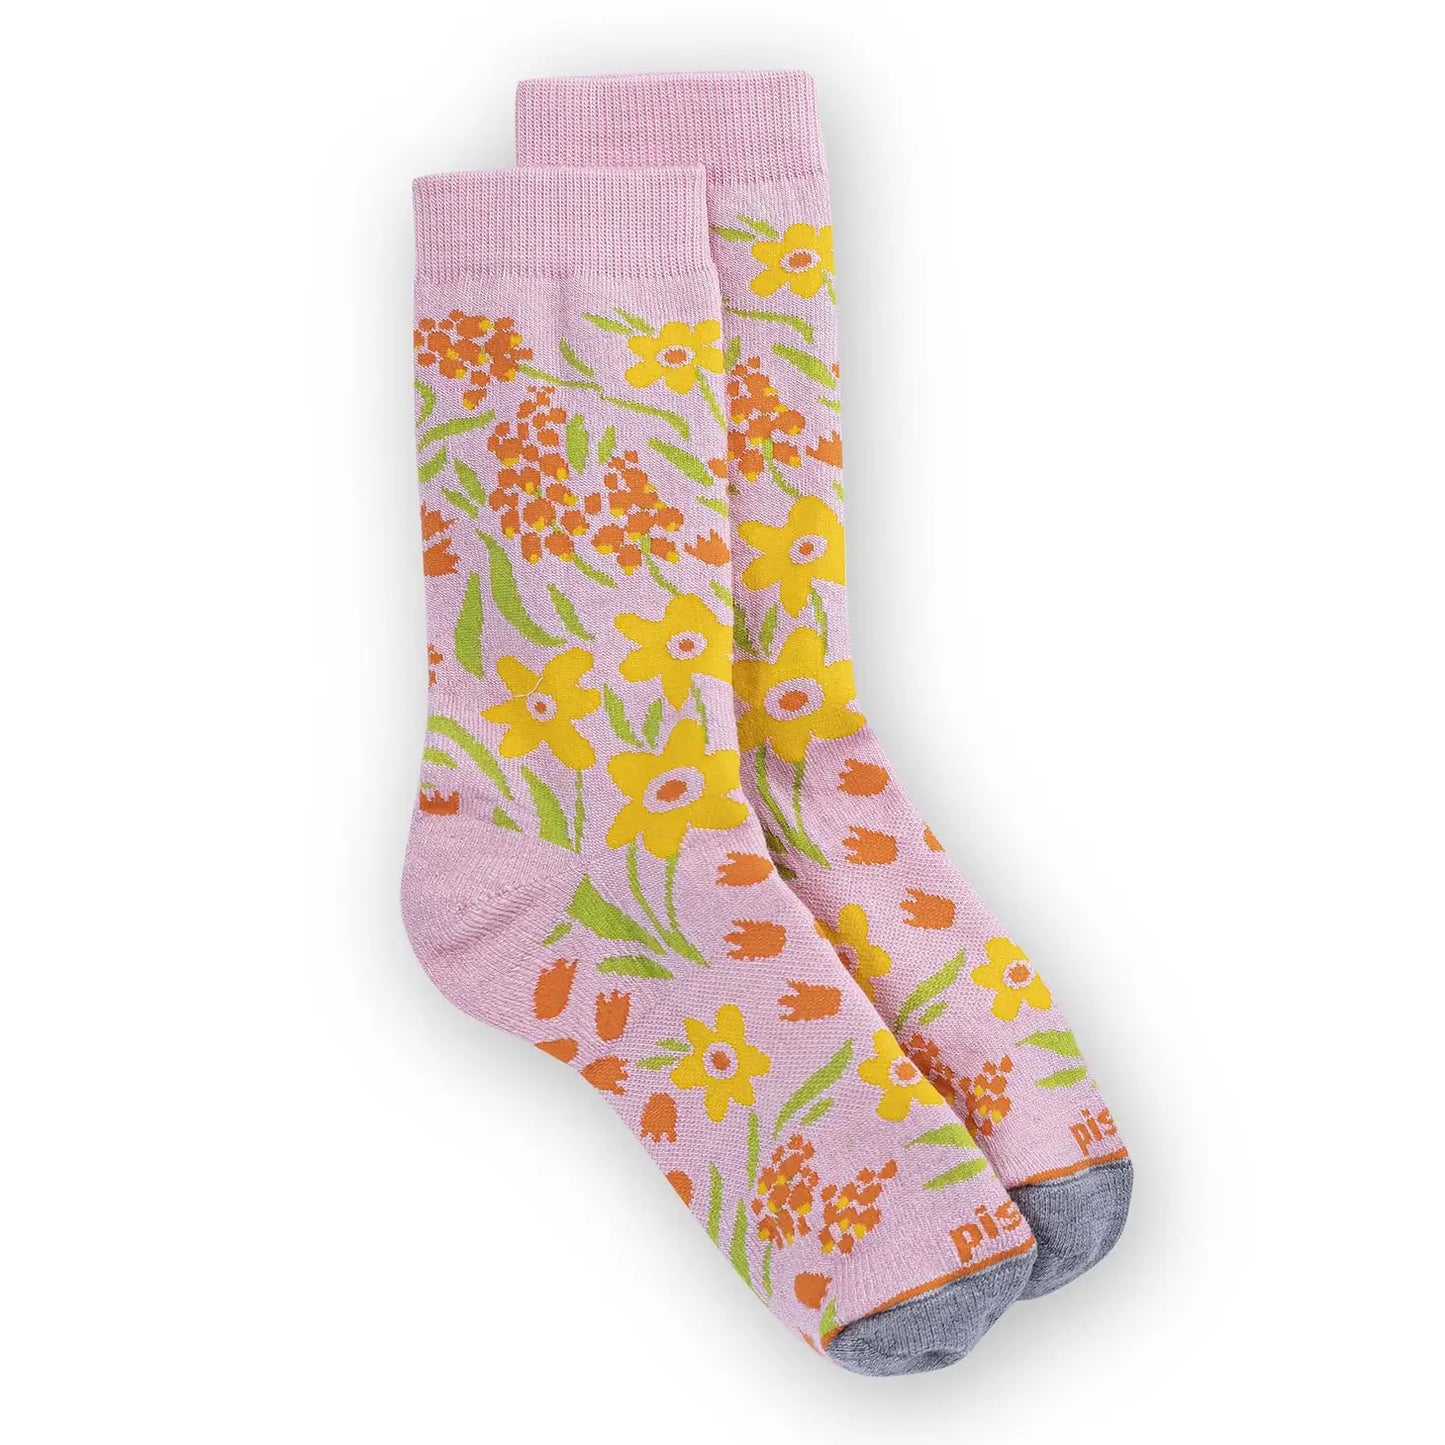 Daisy Crew Sock - Pink